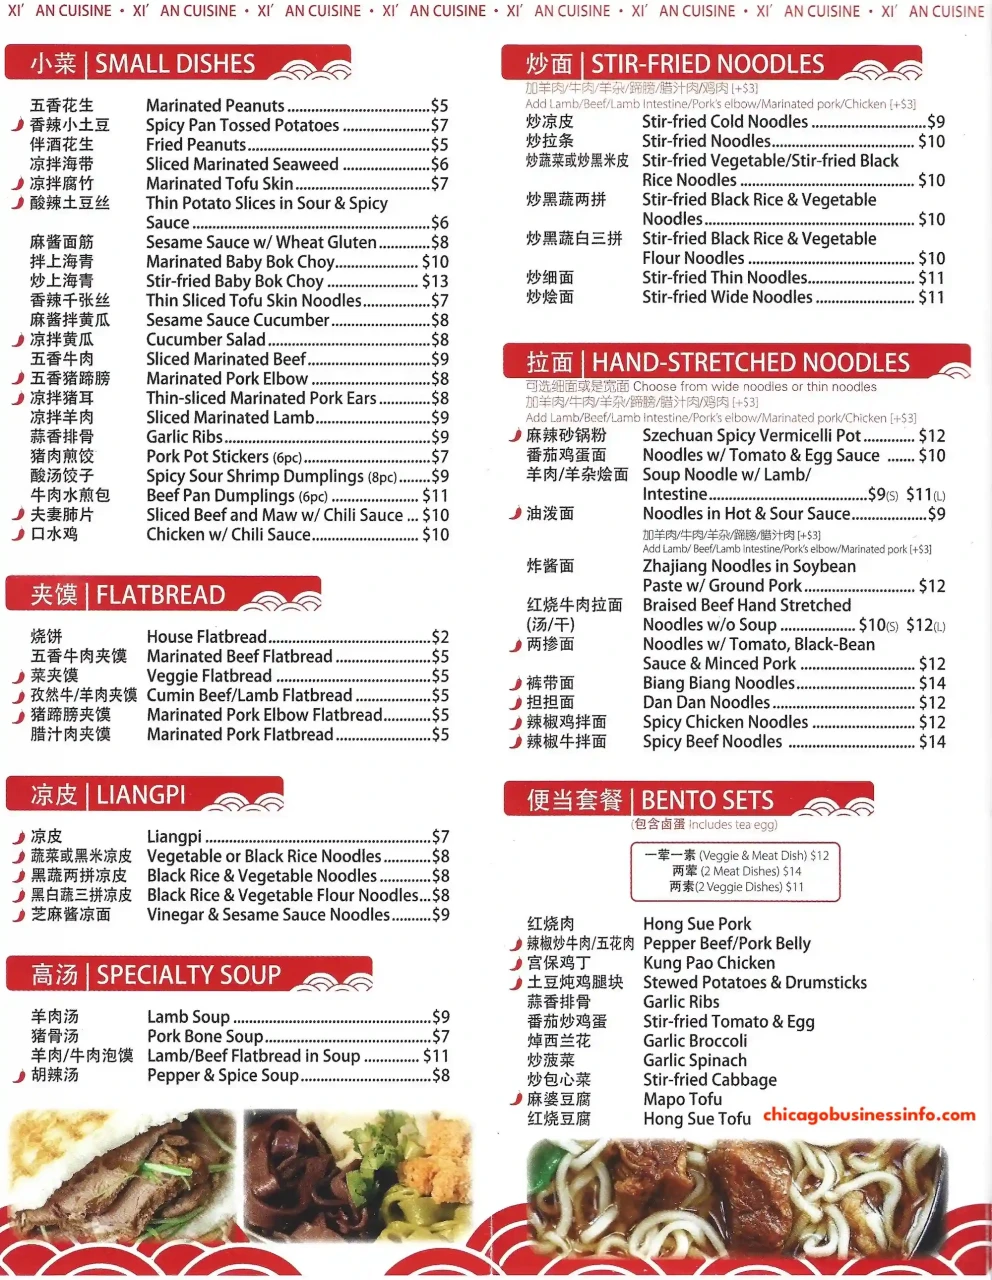 Xi'an Cuisine Jackson Blvd Chicago Carry Out Menu 2